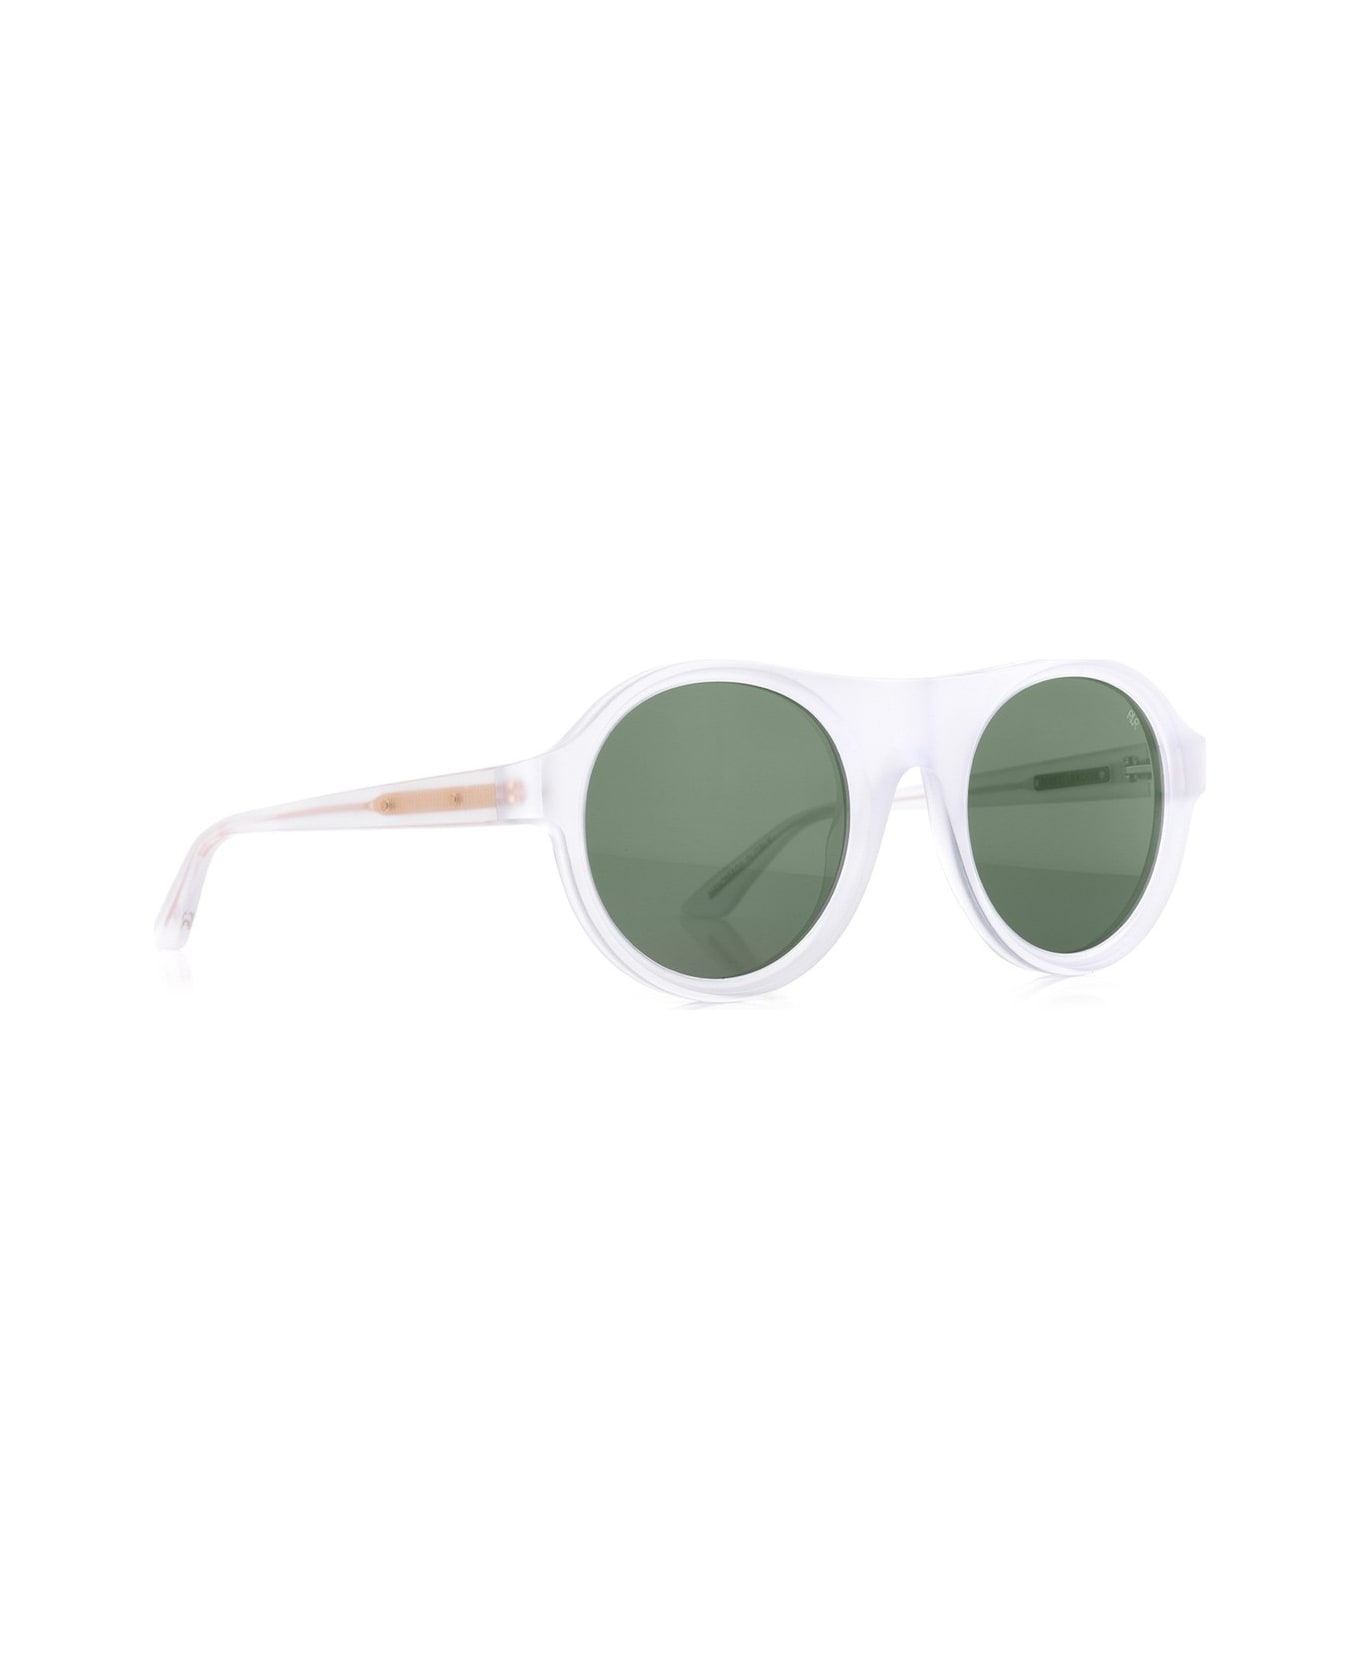 Robert La Roche Rlr S300 Sunglasses - Bianco サングラス